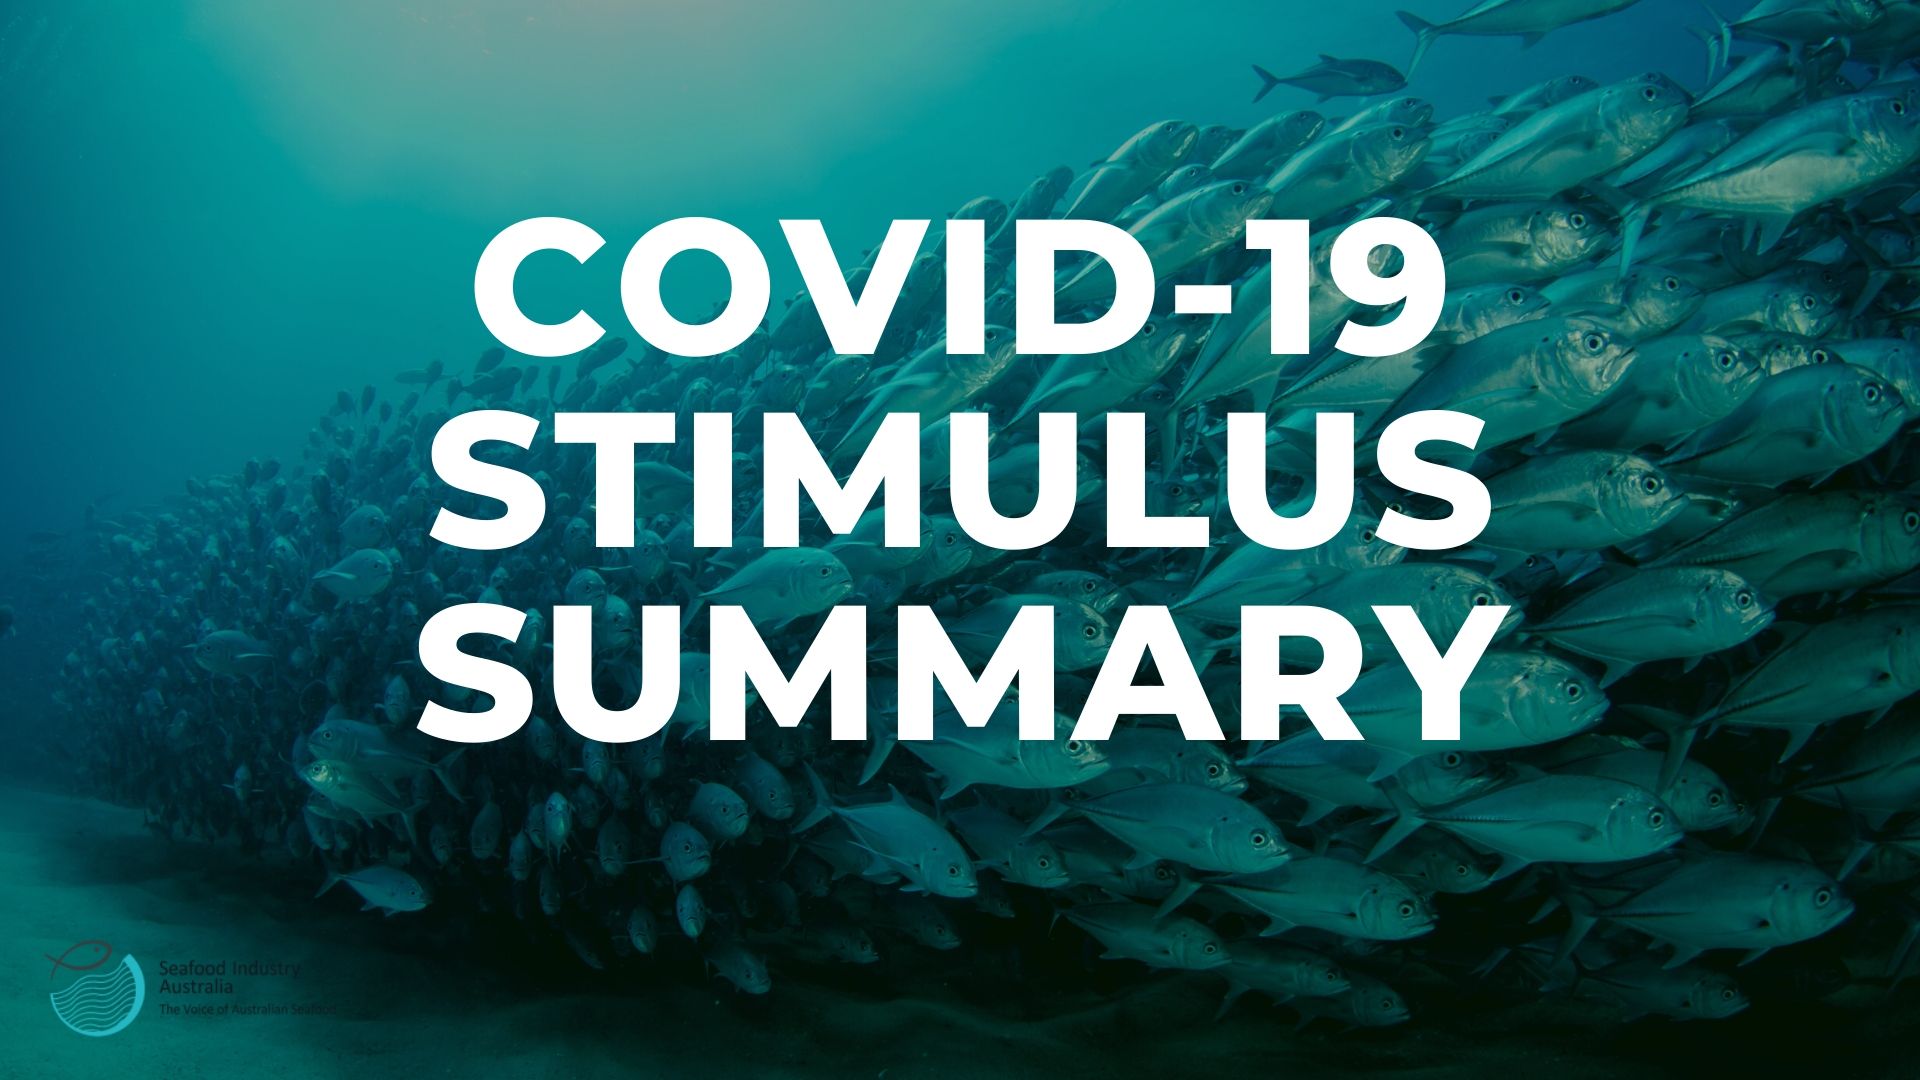 COVID-19 assistance summary and border movement summary